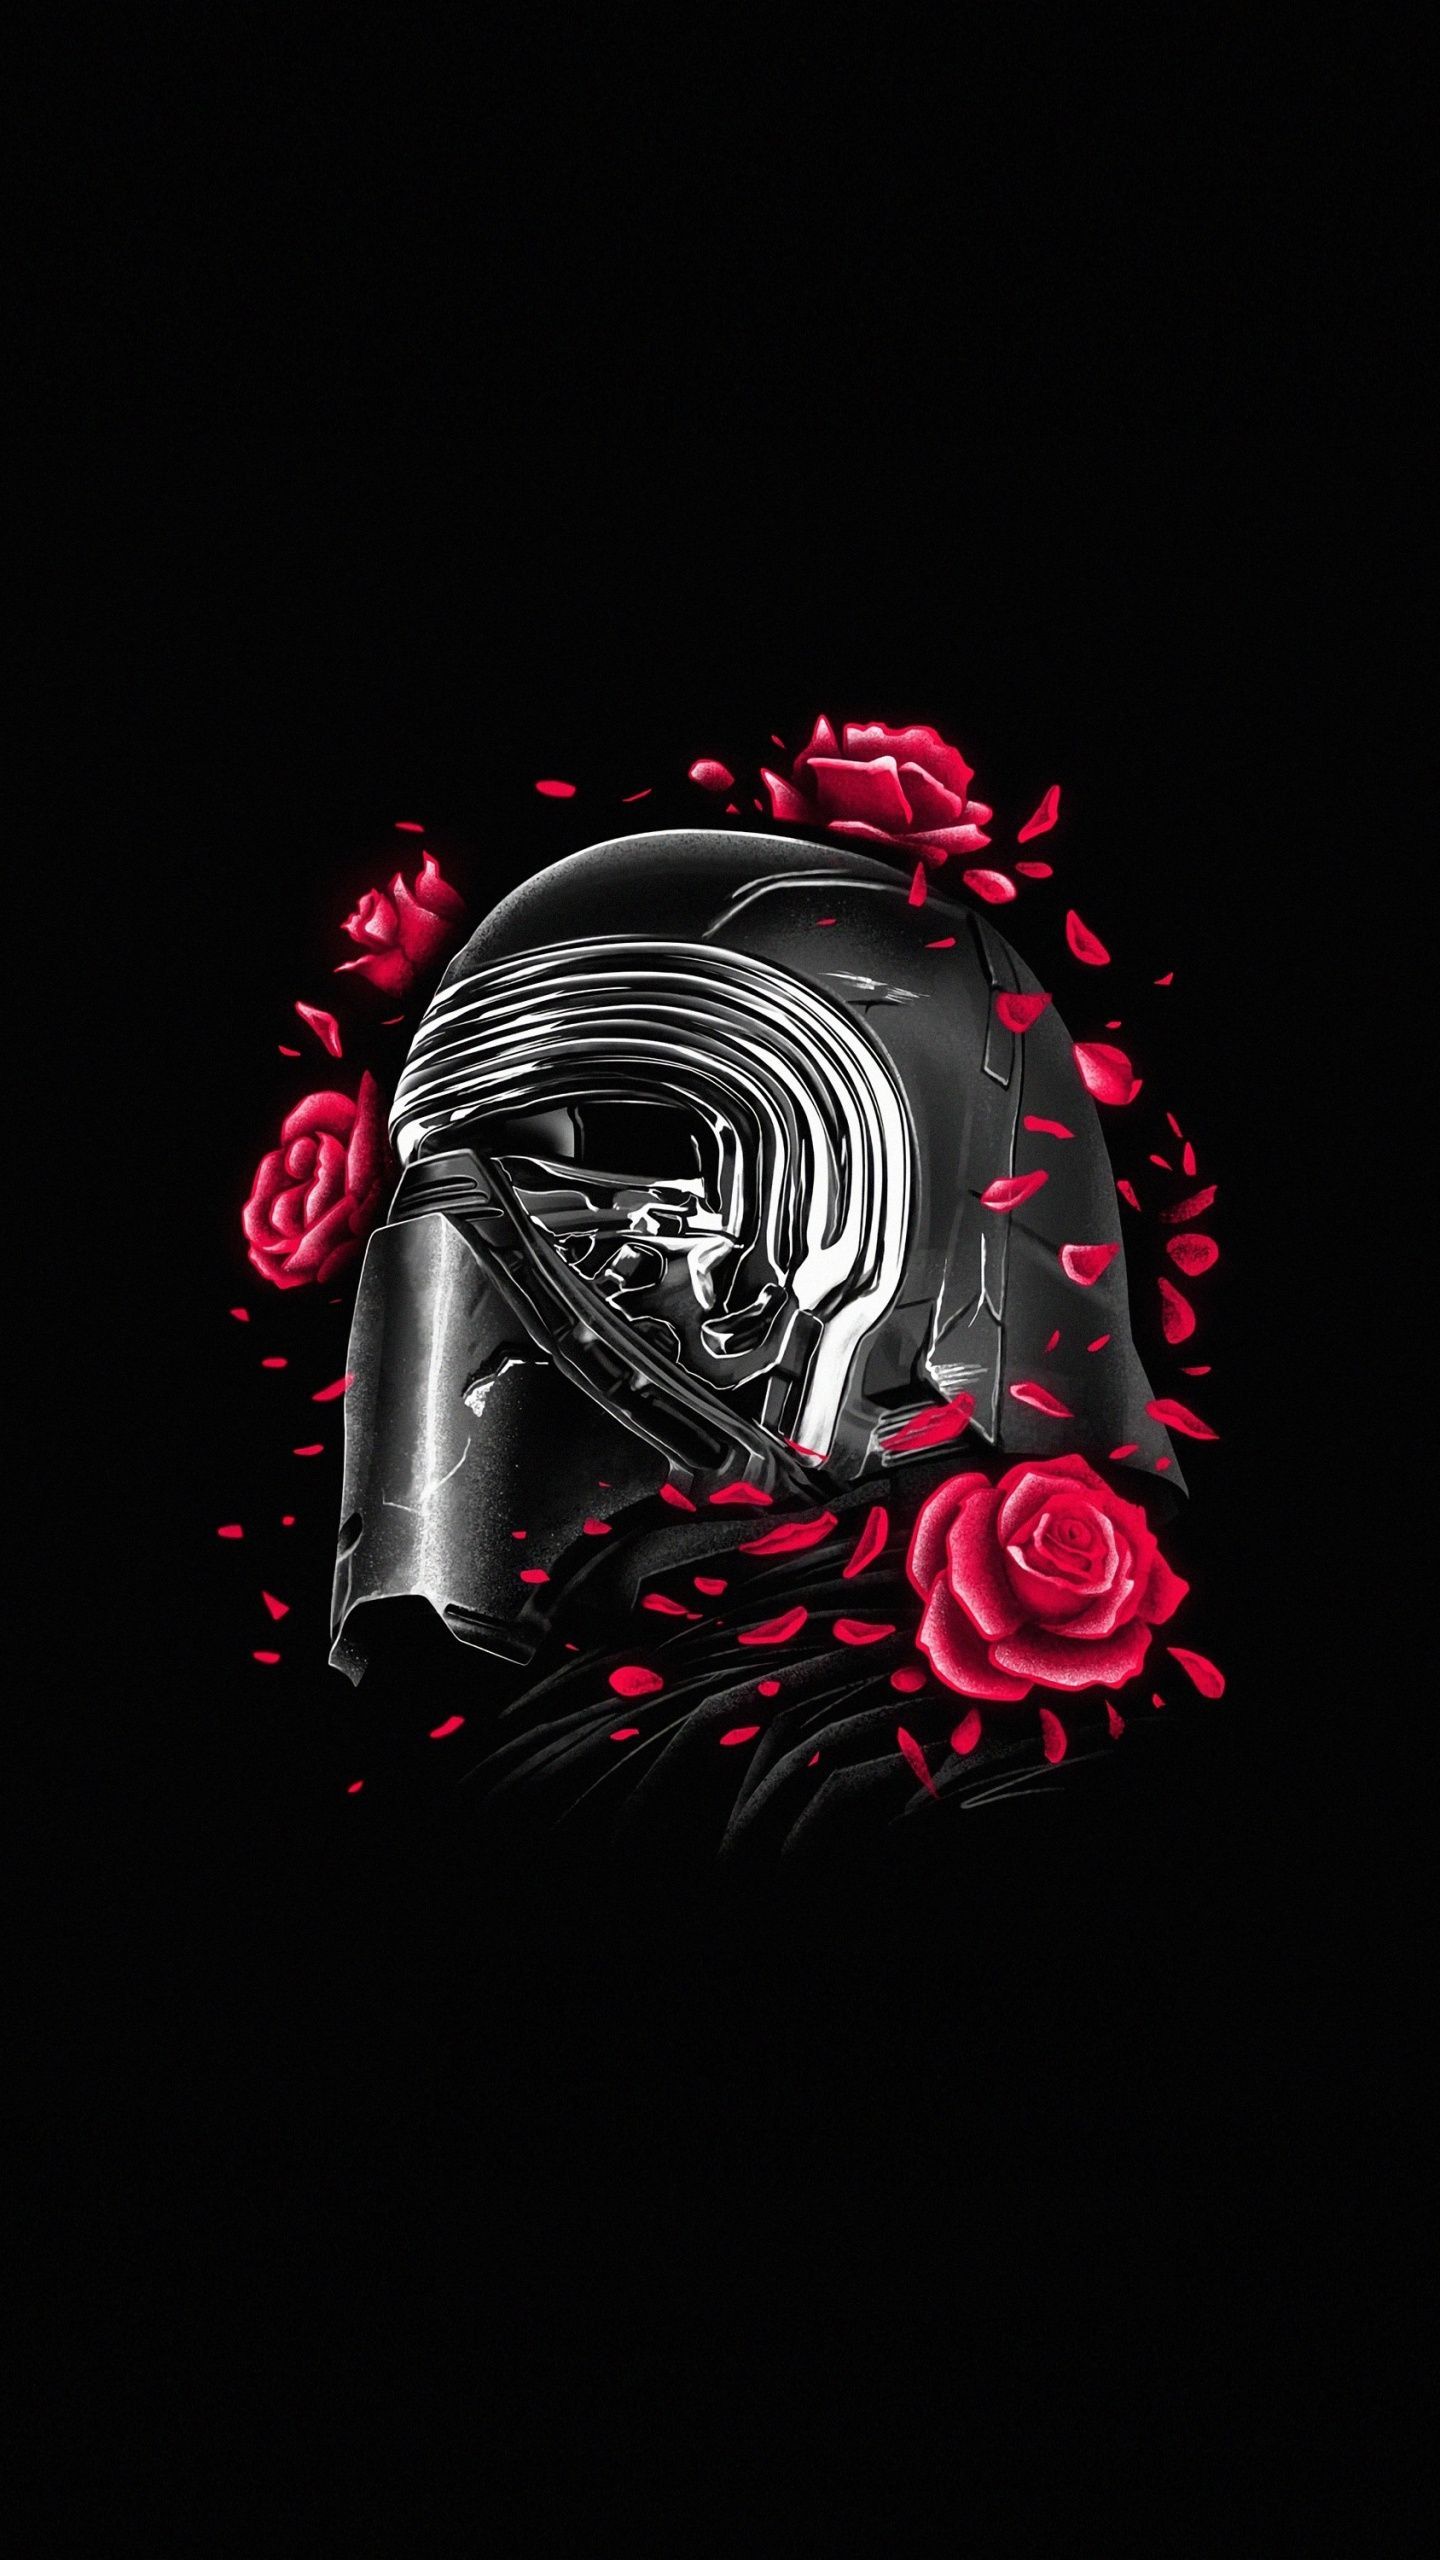 Kylo Ren, helmet and roses, Star Wars, minimal wallpaper